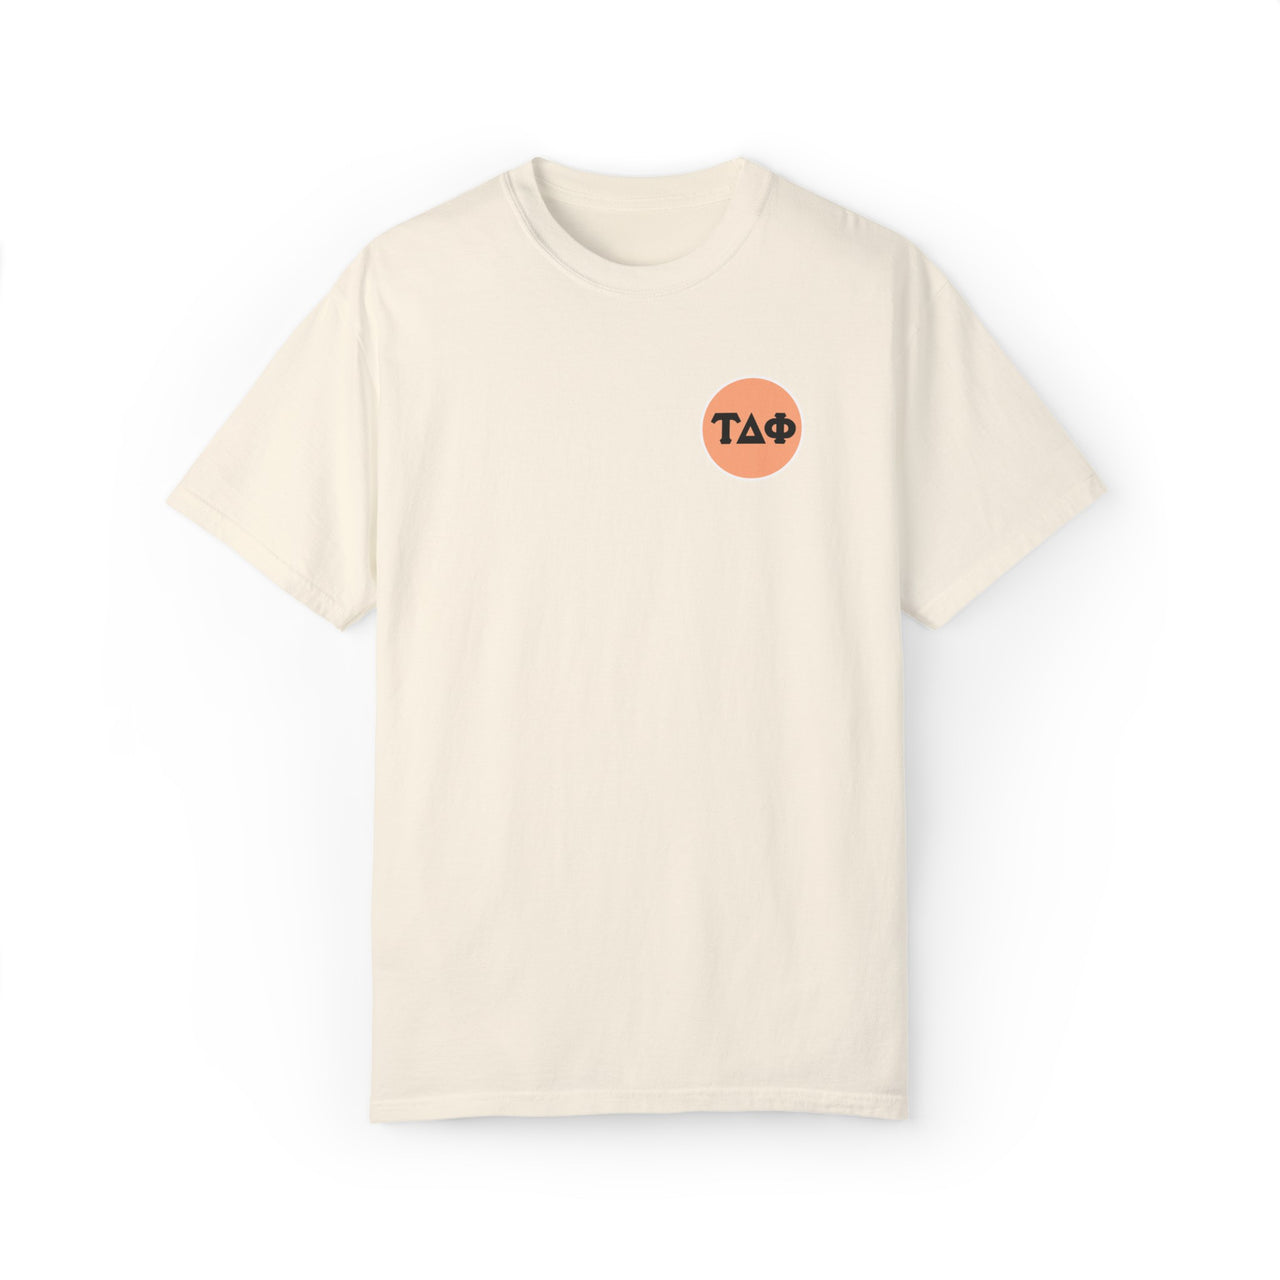 Tau Delta Phi Graphic T-Shirt | Desert Mountains